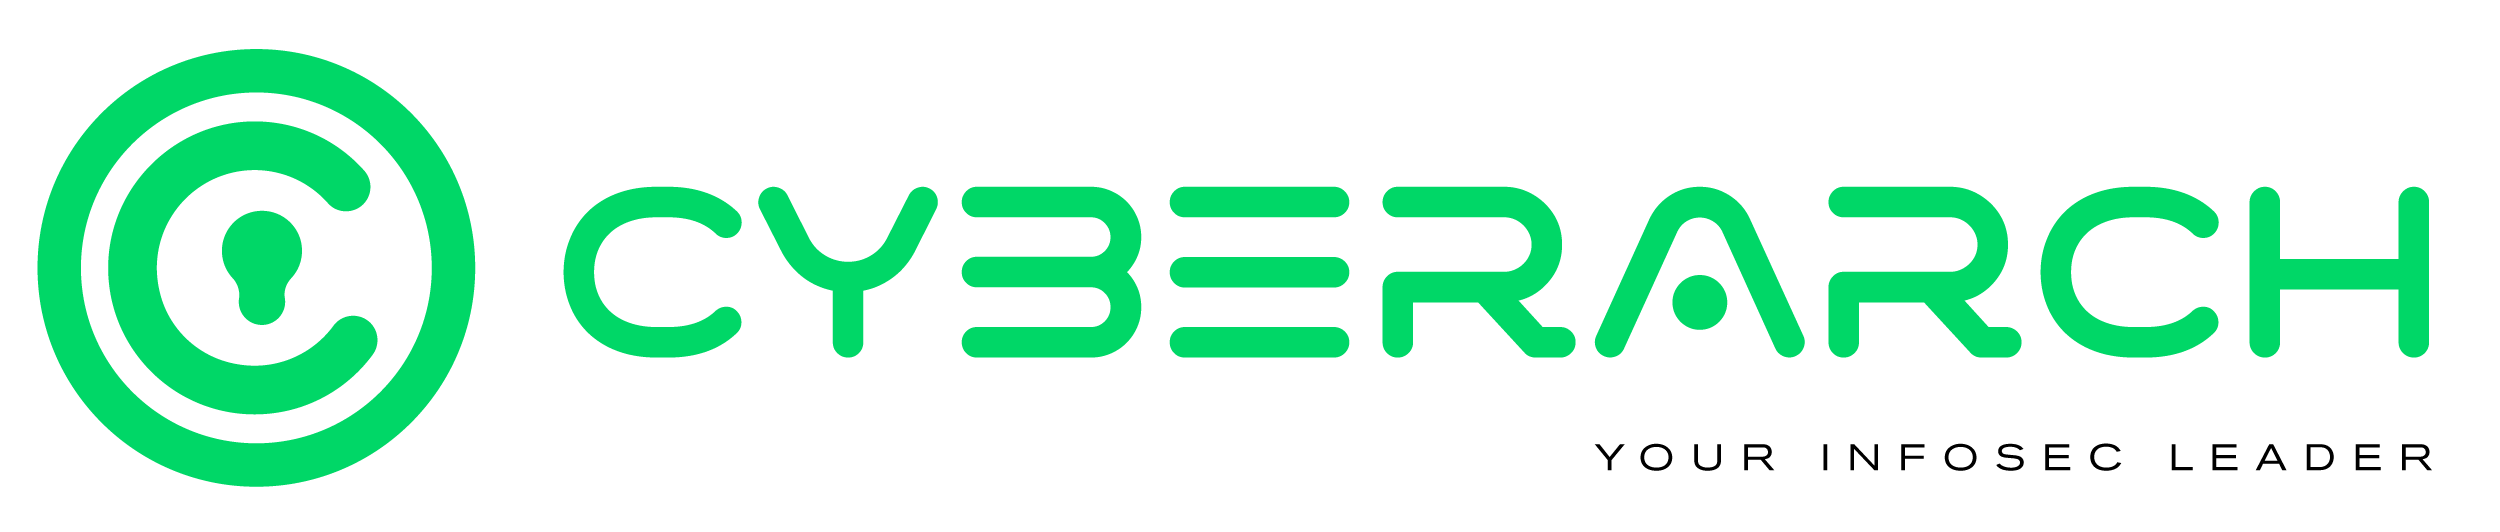 Cyberarch logo